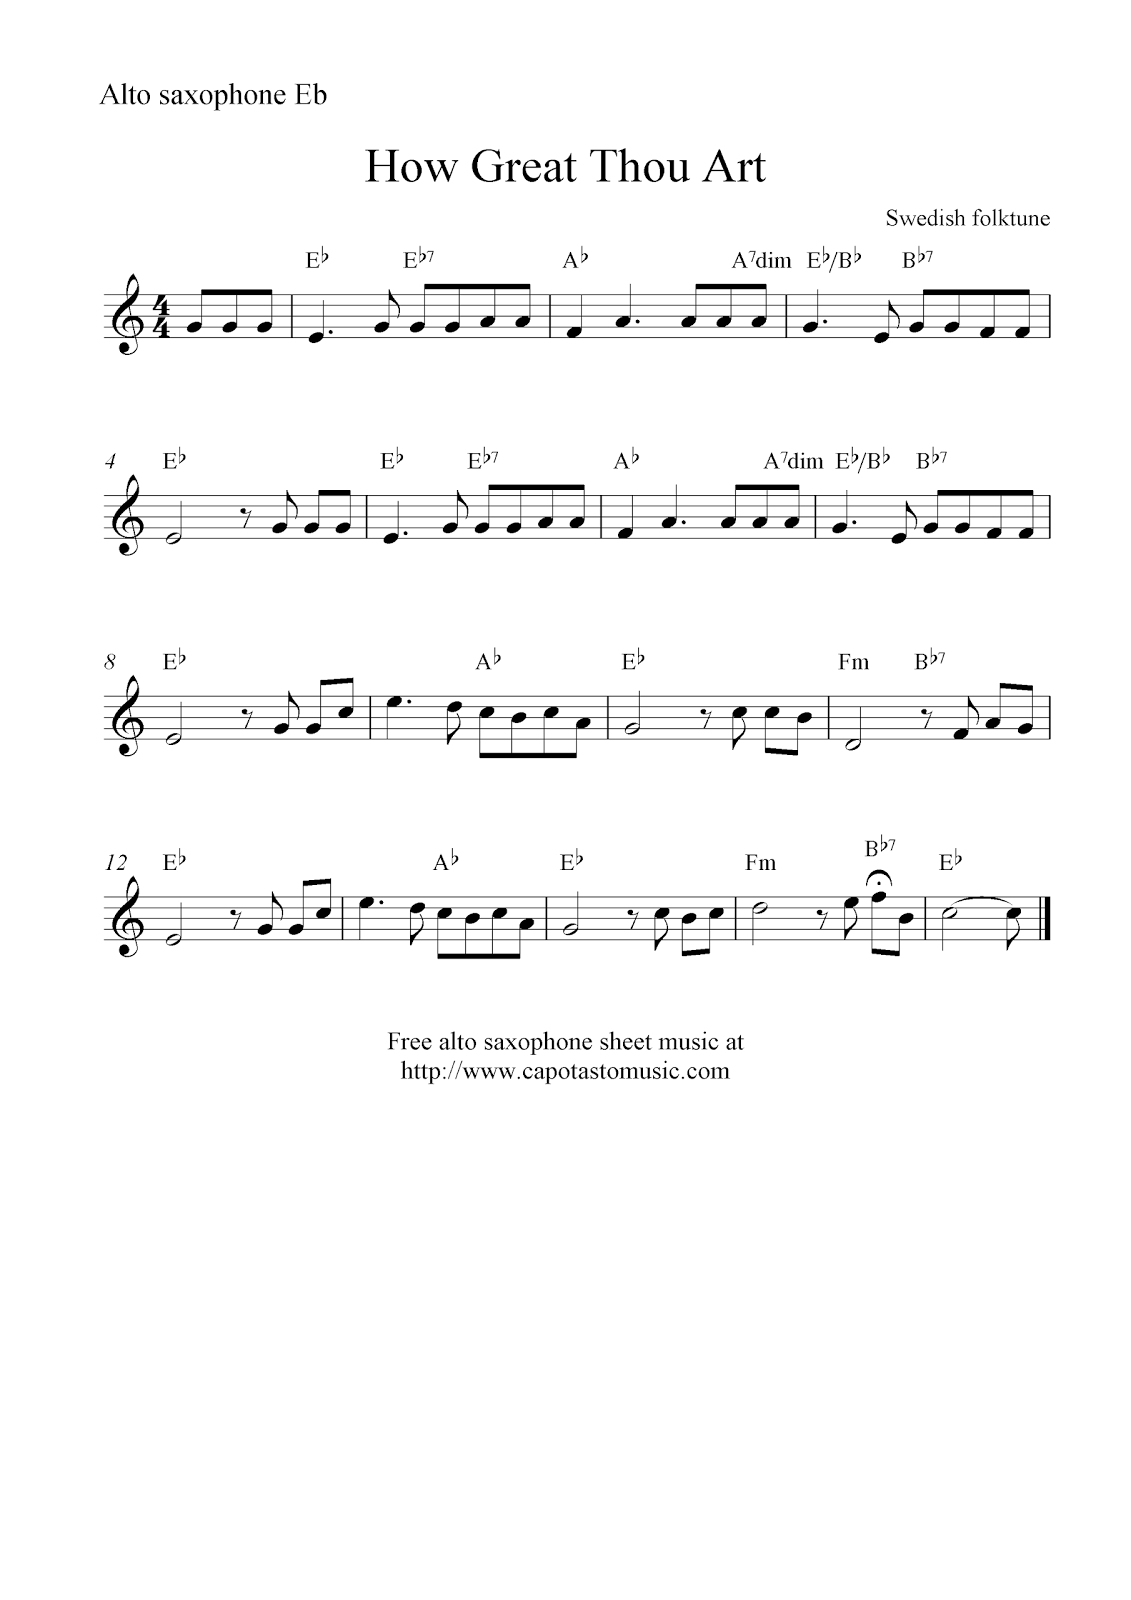 How Great Thou Art, Free Alto Saxophone Sheet Music Notes - Free Printable Alto Saxophone Sheet Music